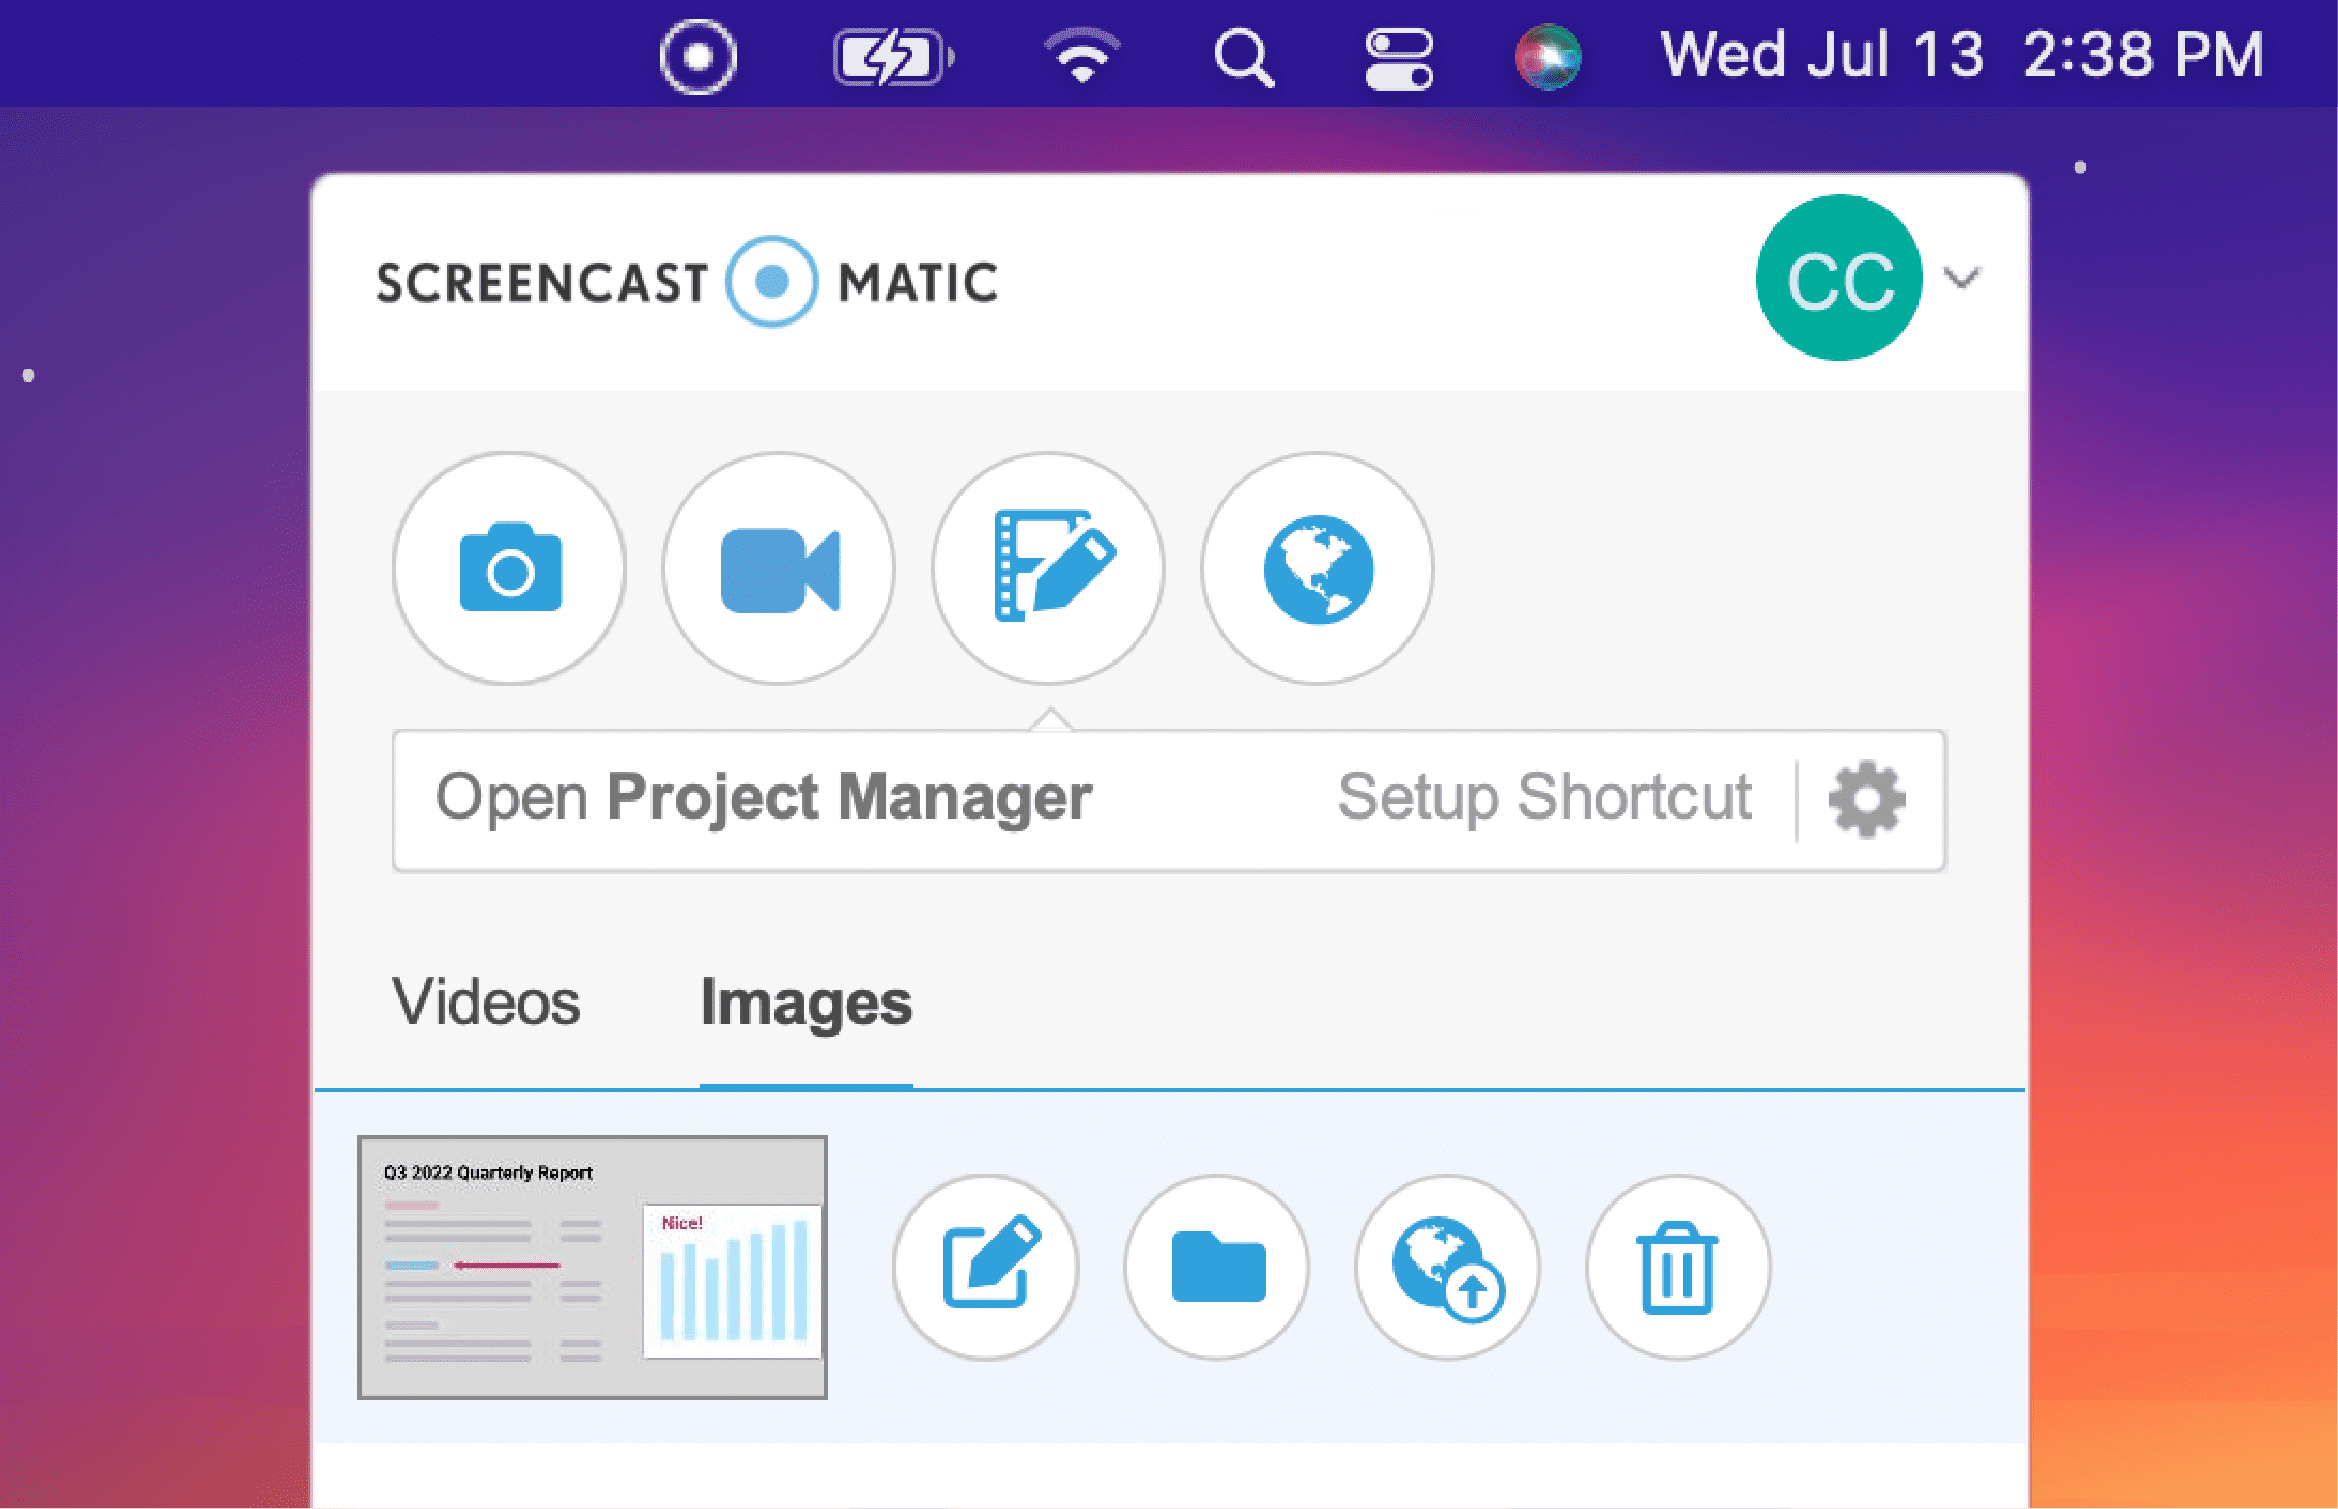 Take a screenshot on Mac or Windows with the quick launch screenshot tool